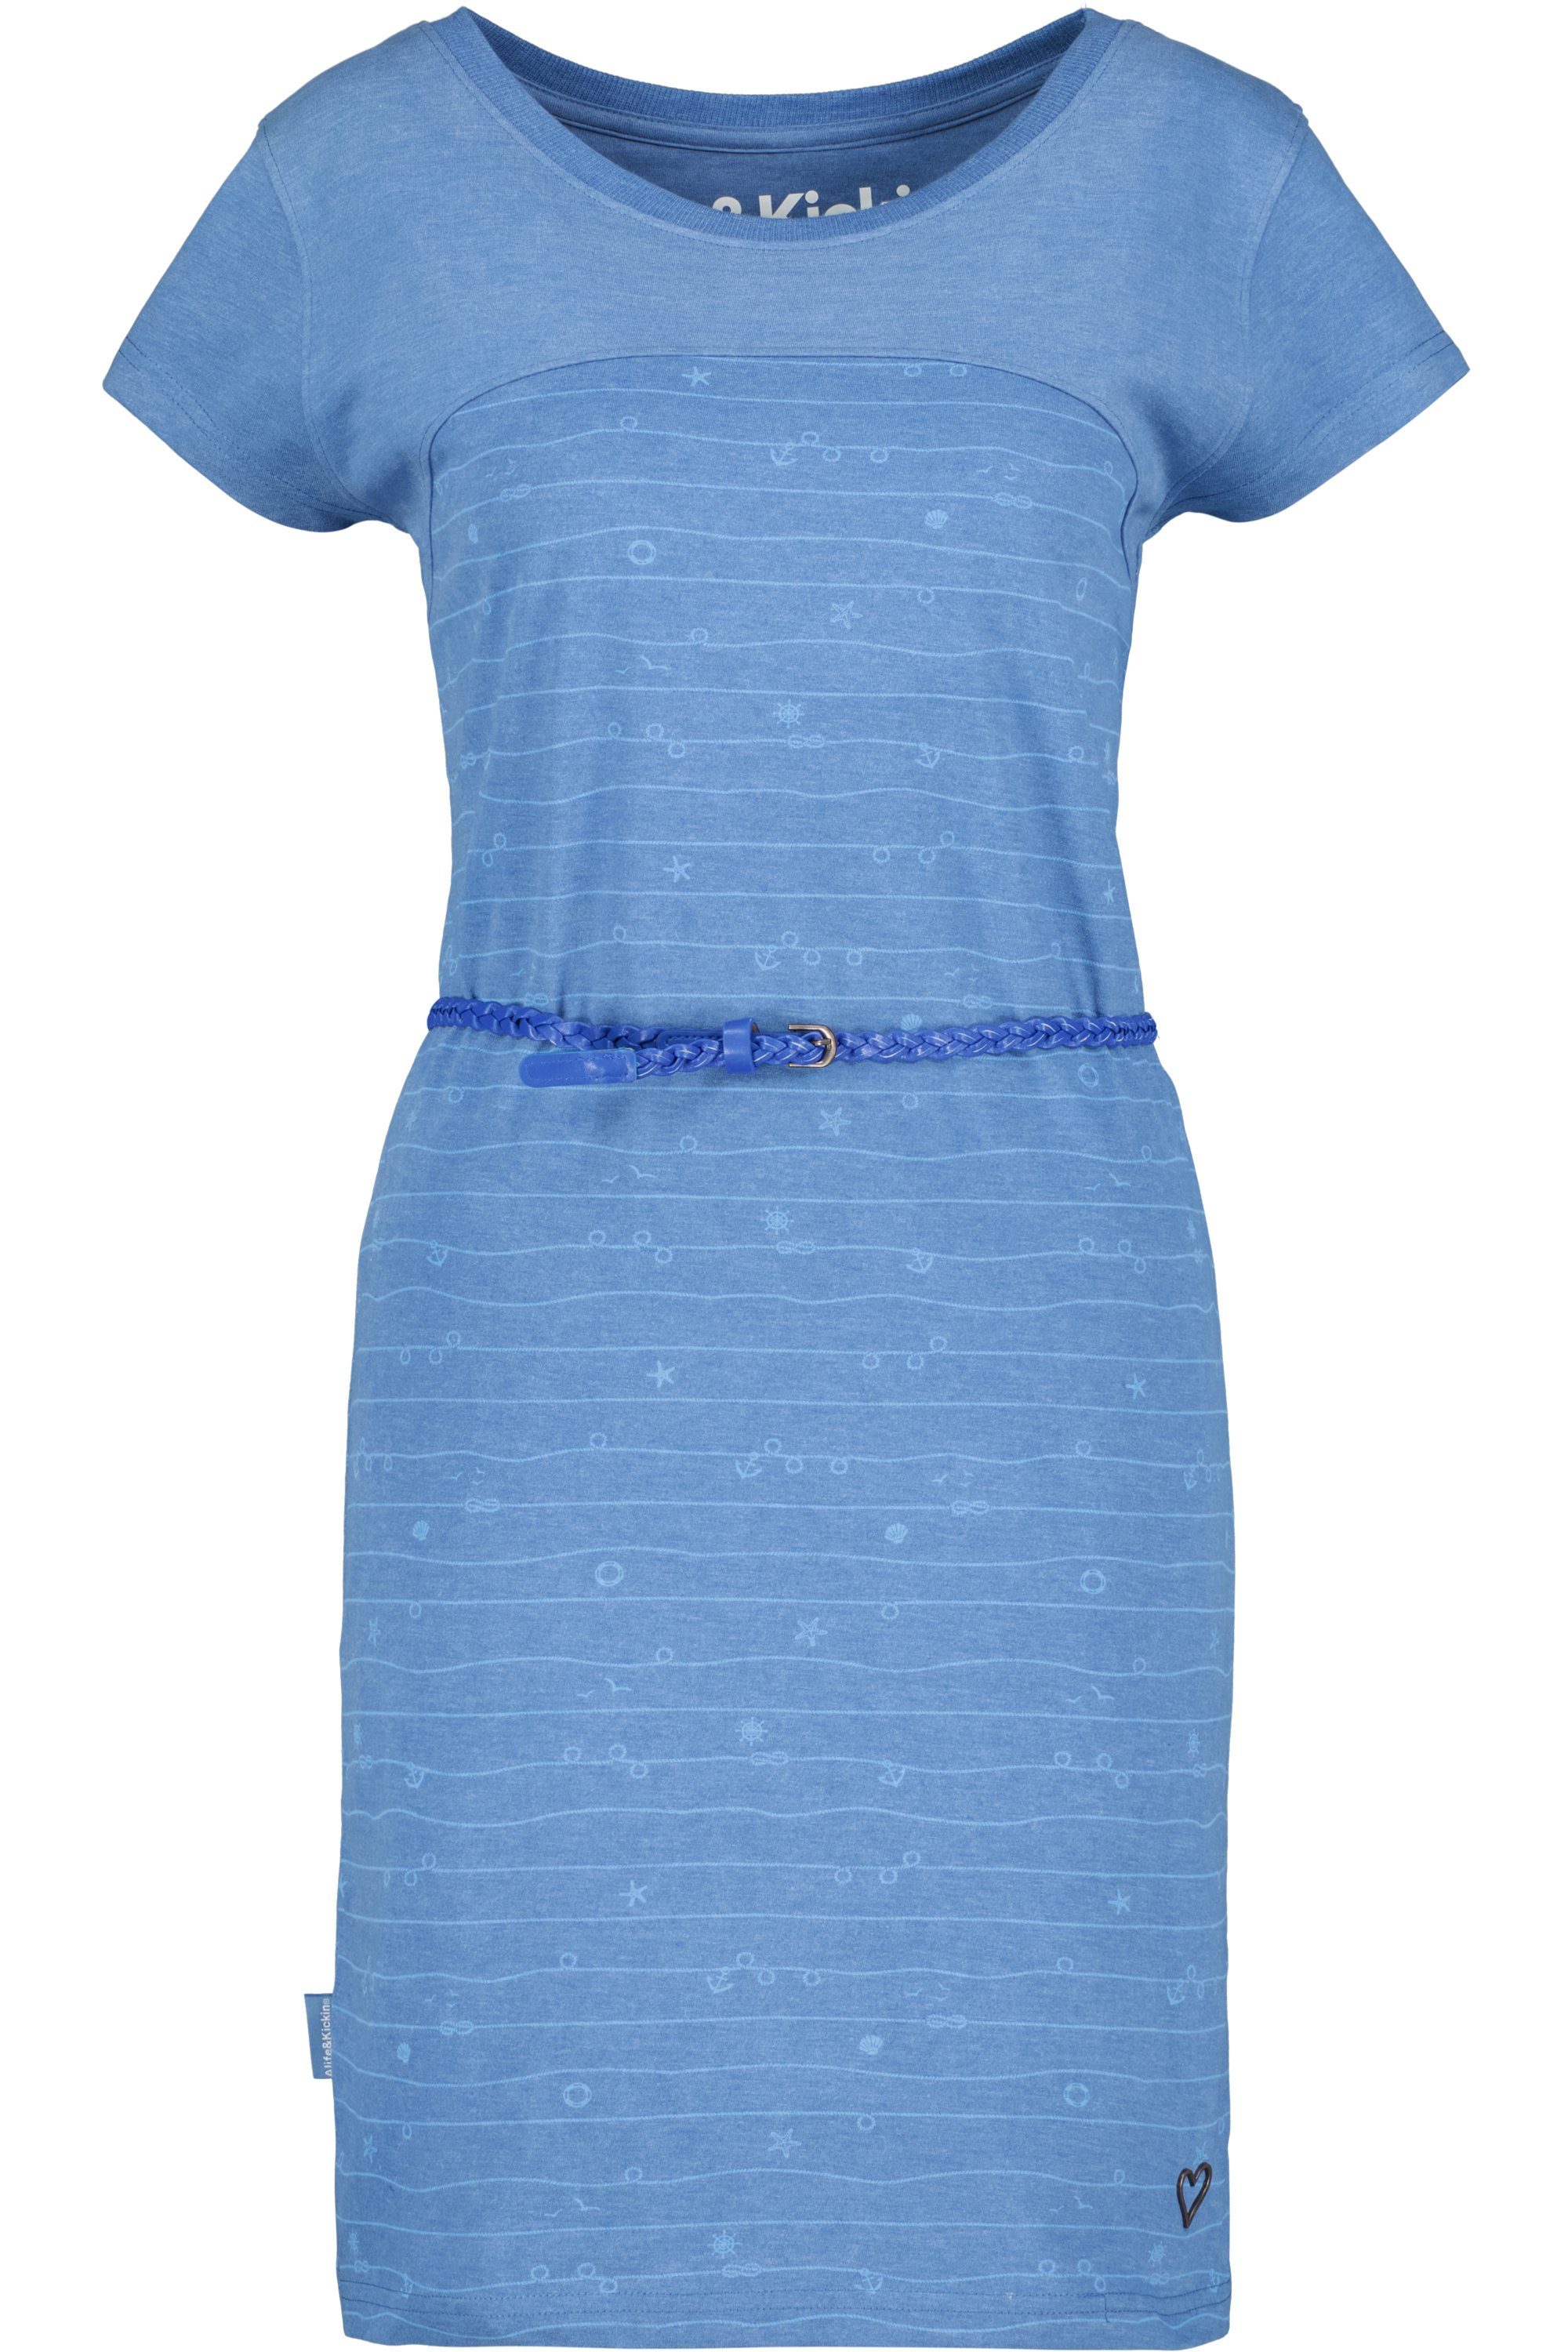 Alife & Kickin Kleid ClariceAK cobalt Damen Sommerkleid, Blusenkleid Dress